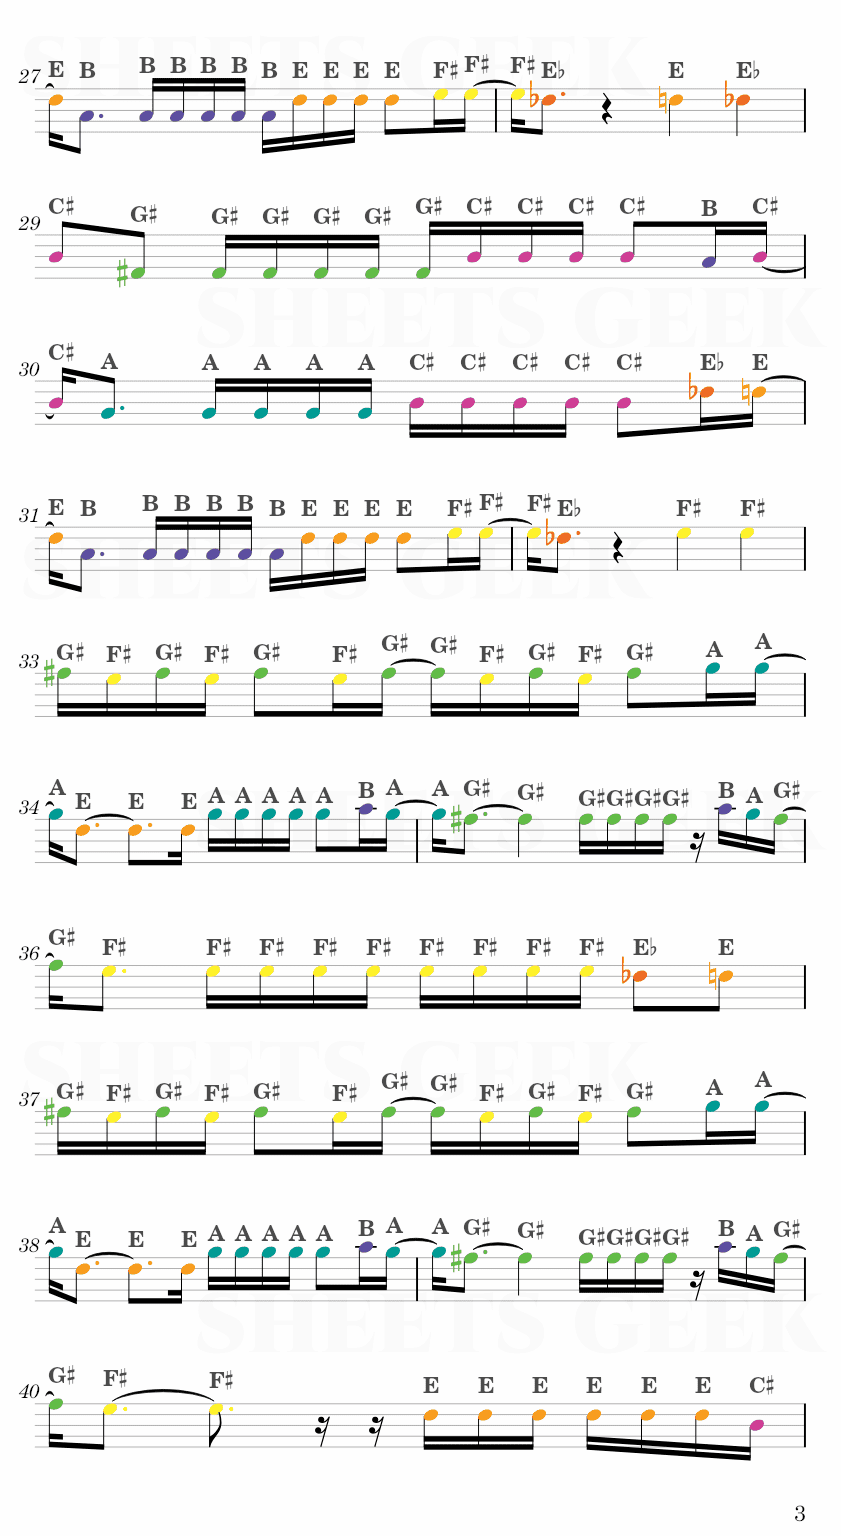 Despacito - Luis Fonsi Easy Sheets Music Free for piano, keyboard, flute, violin, sax, celllo 3